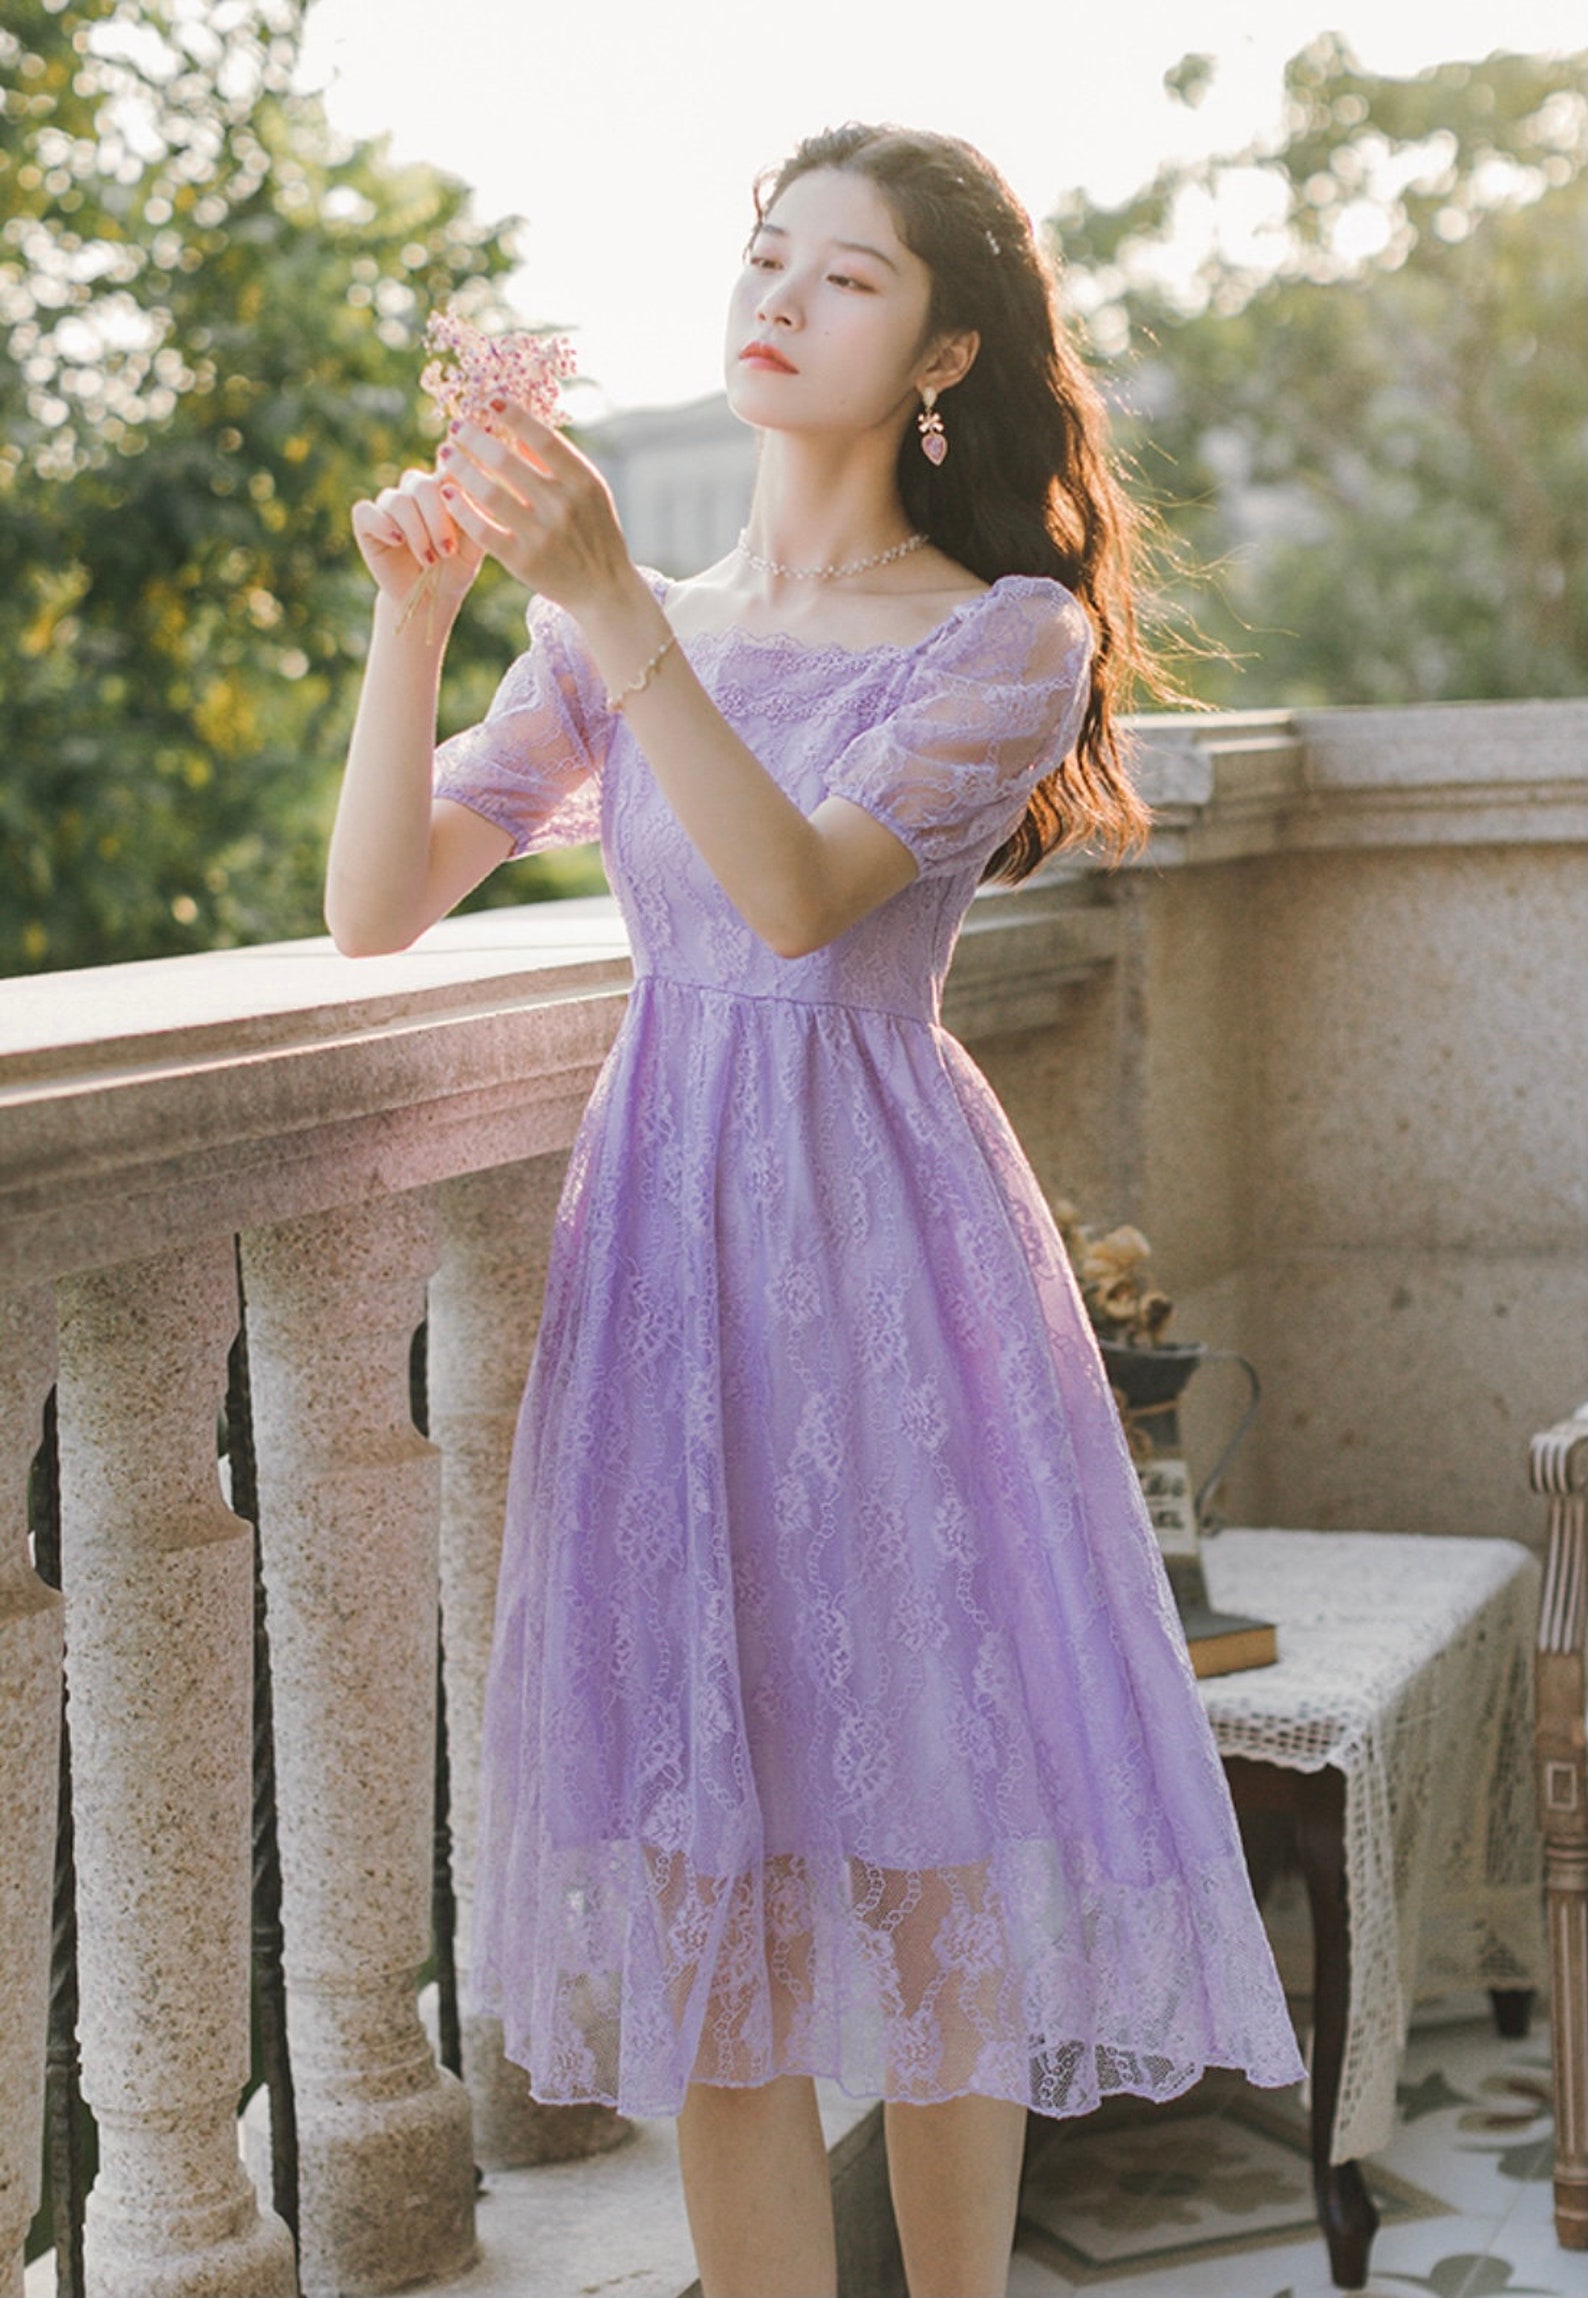 Fairy Dress for Women-Princess Core Dress-Short | Etsy